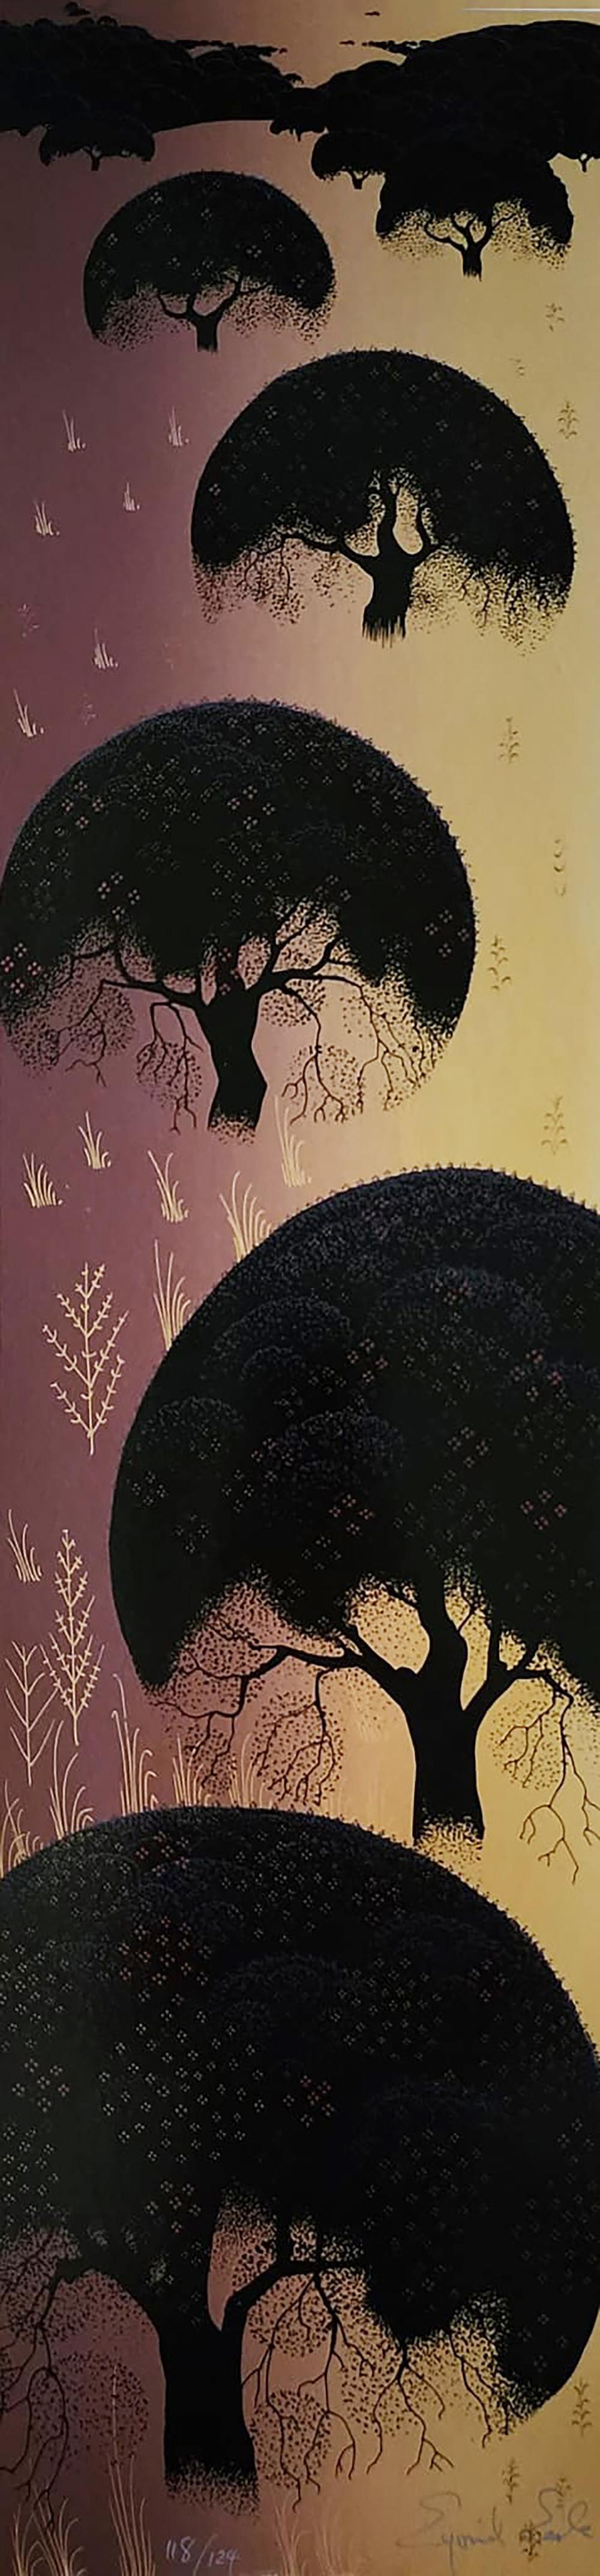 'SANTA YNEZ' 1974 - Print by Eyvind Earle